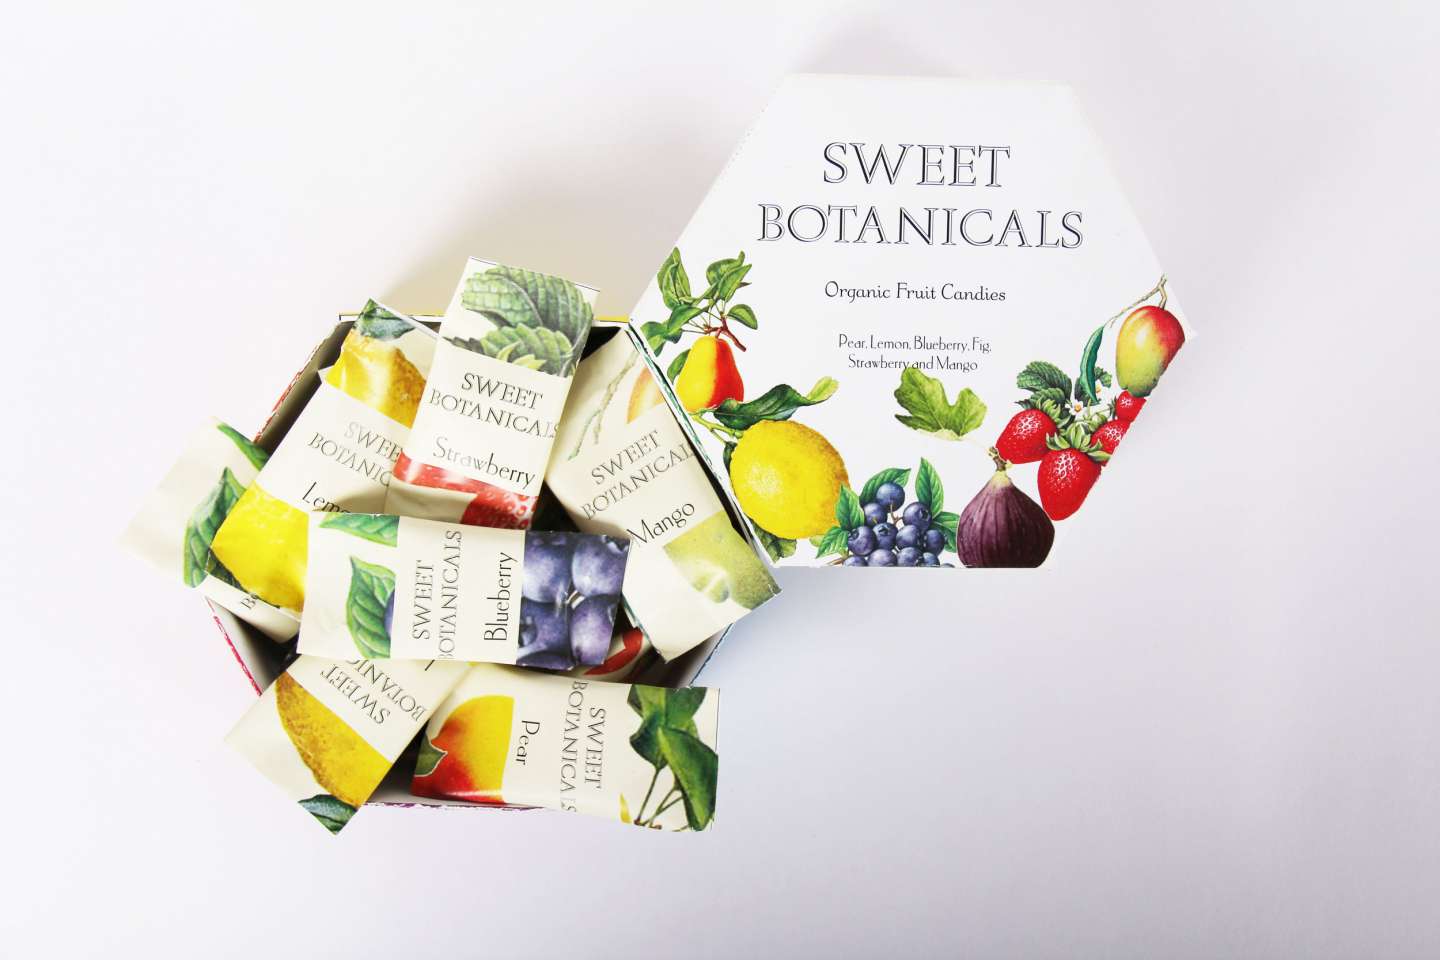 Sweets Packaging